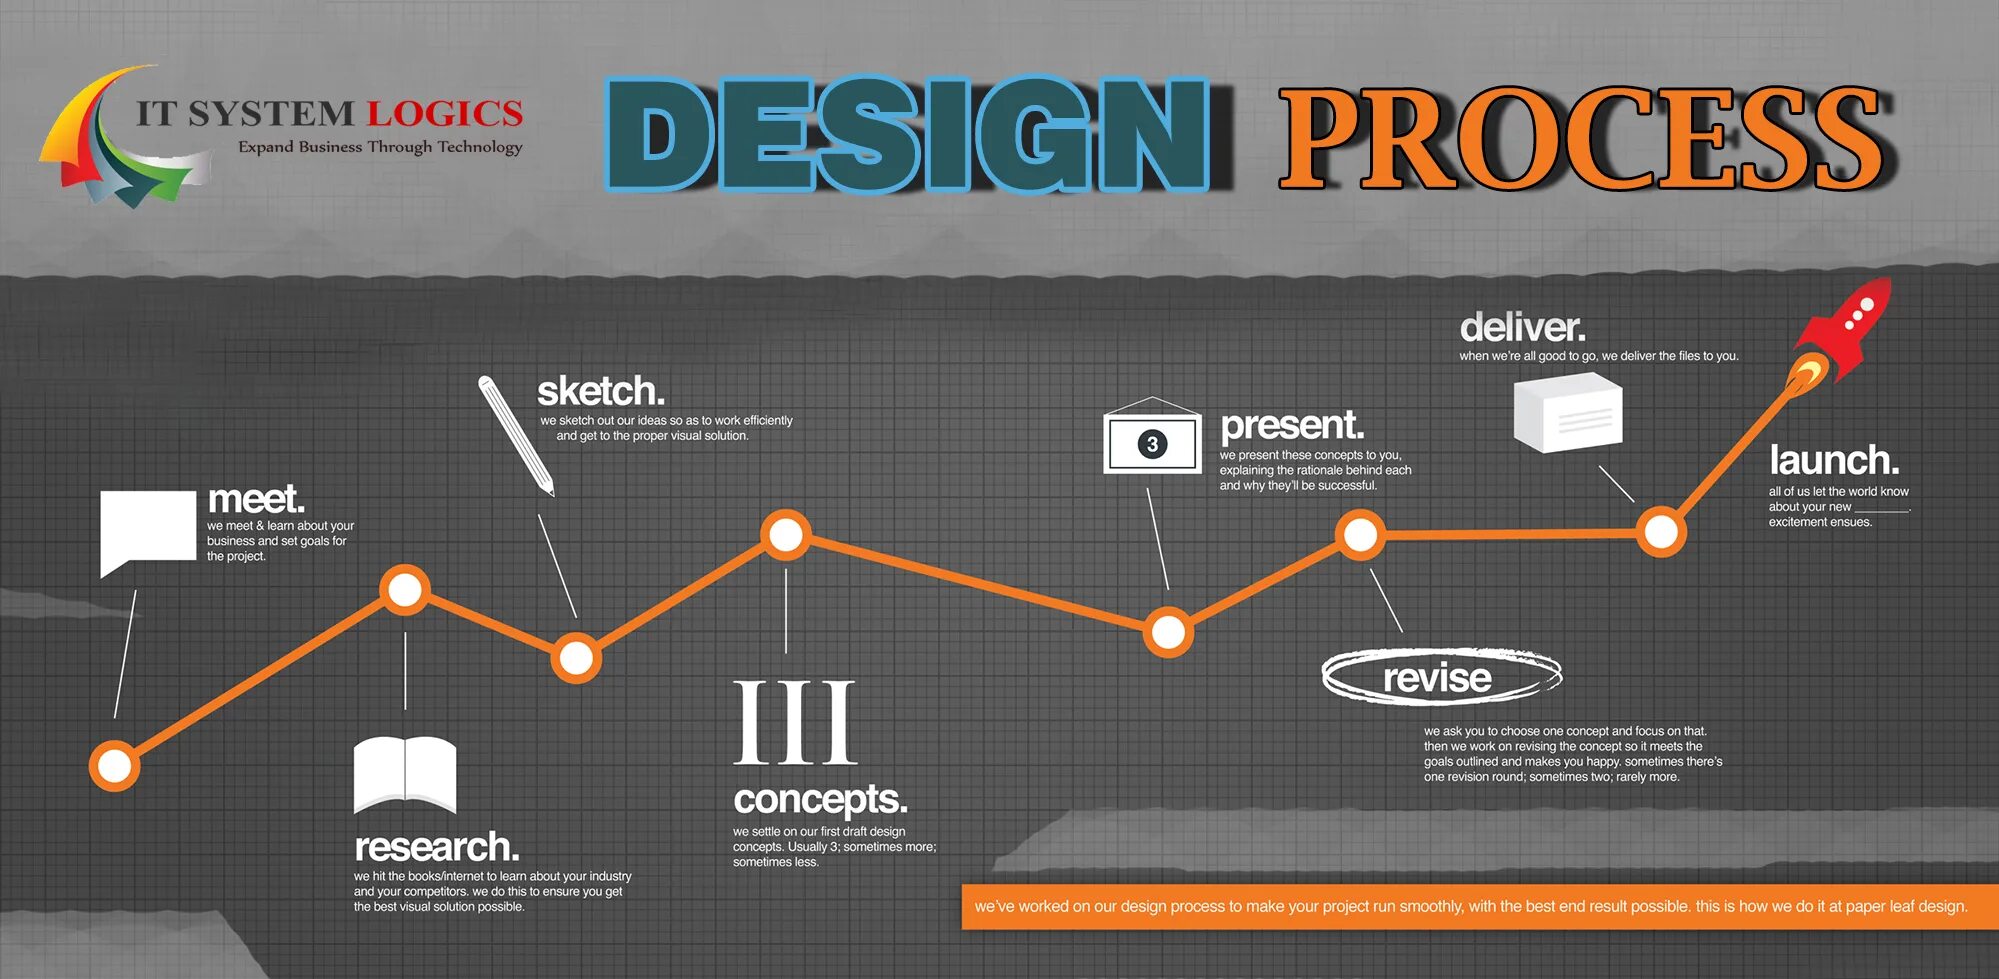 Дизайн process. Design process poster. Process Design package. Design in process.